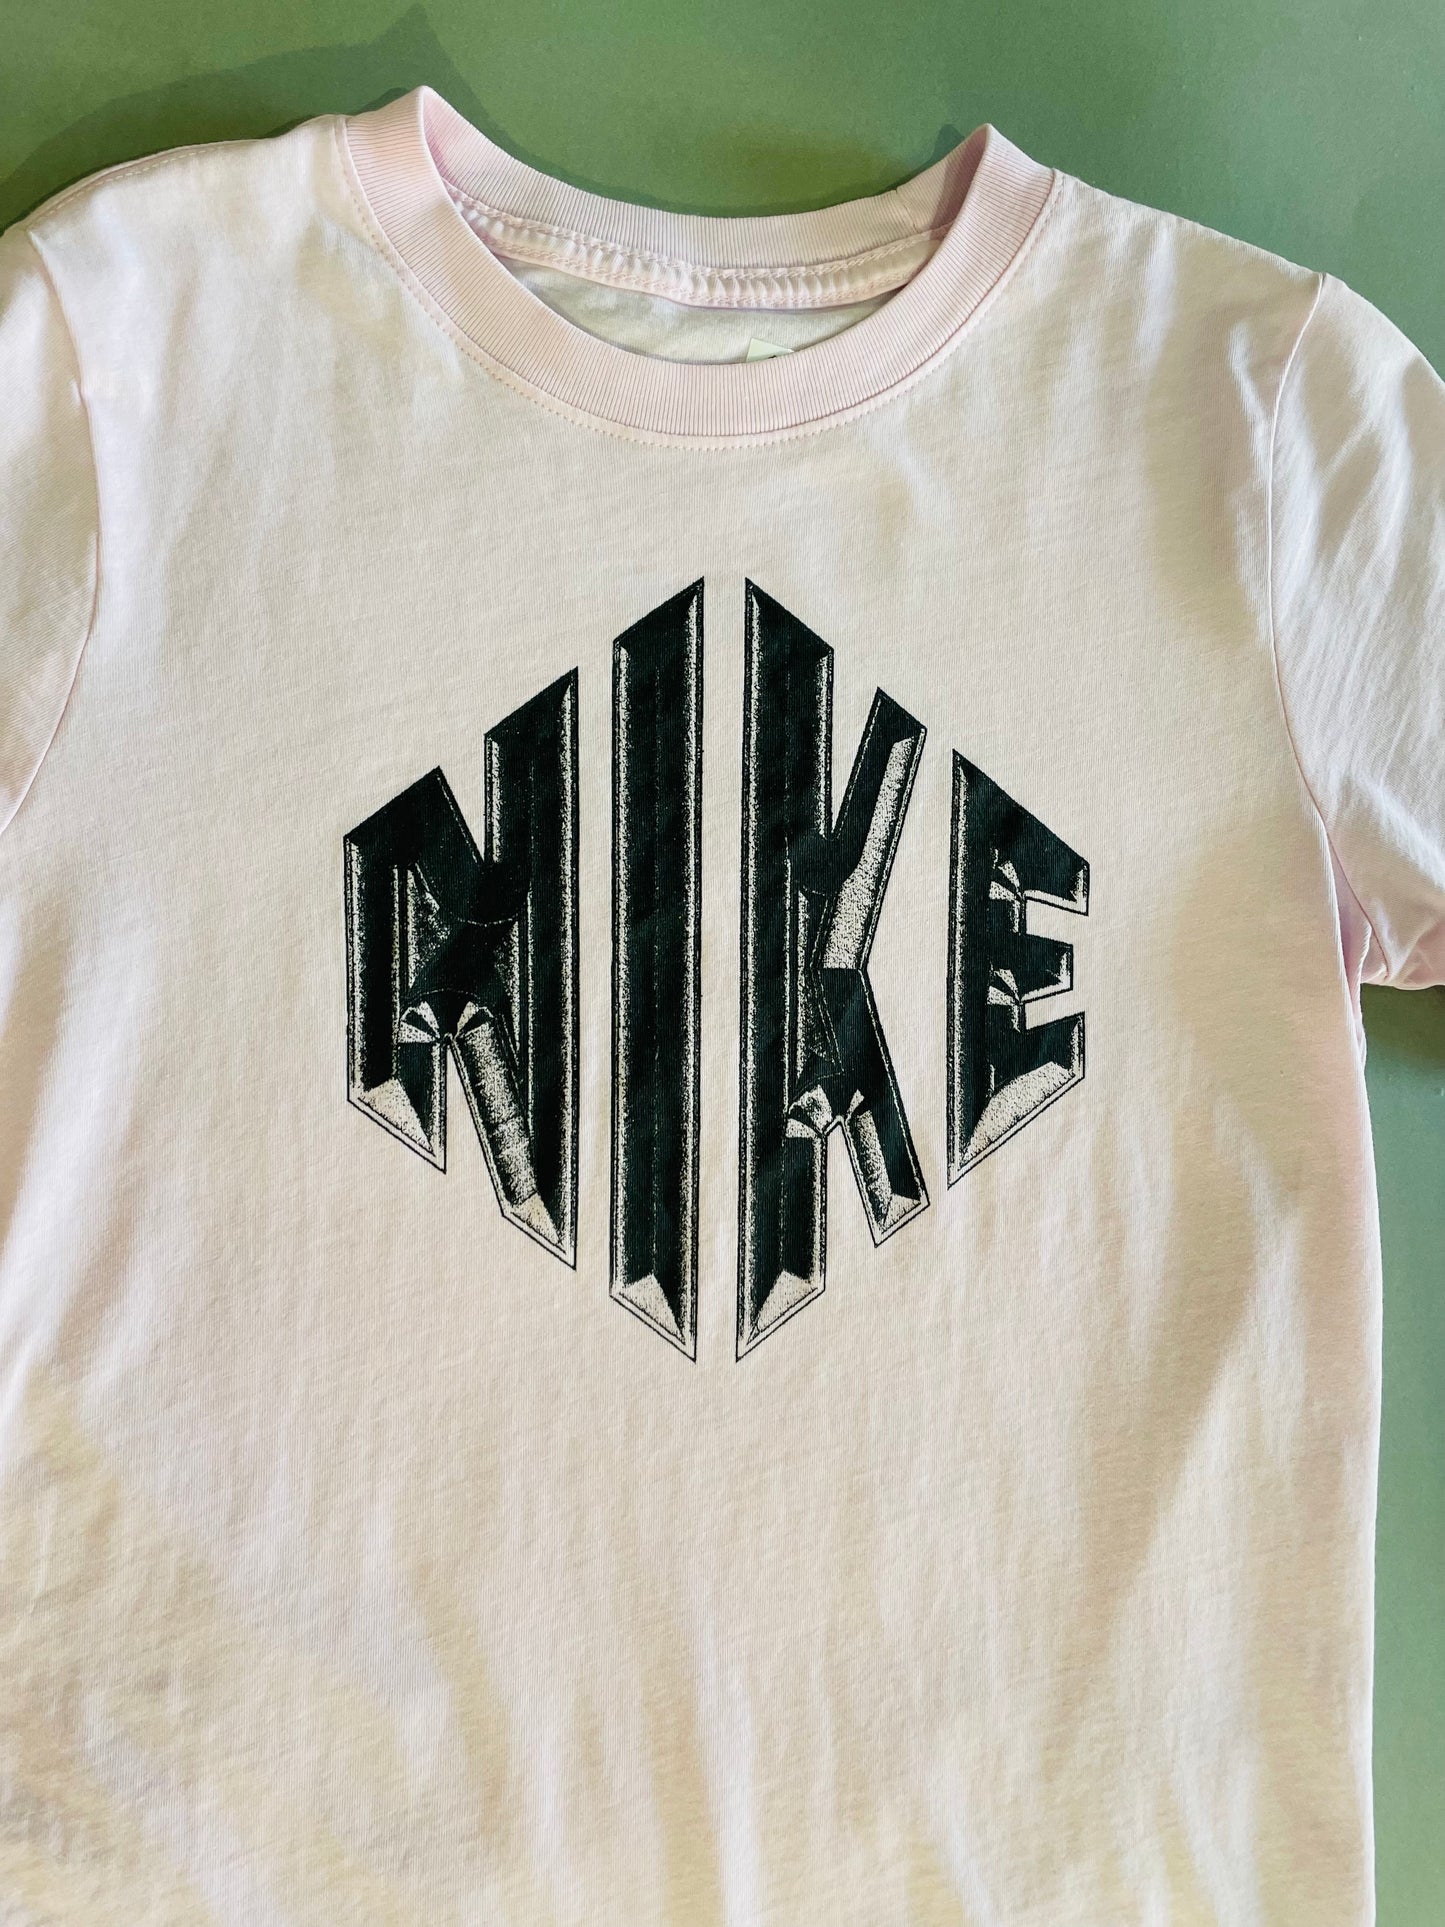 Nike kids shirt